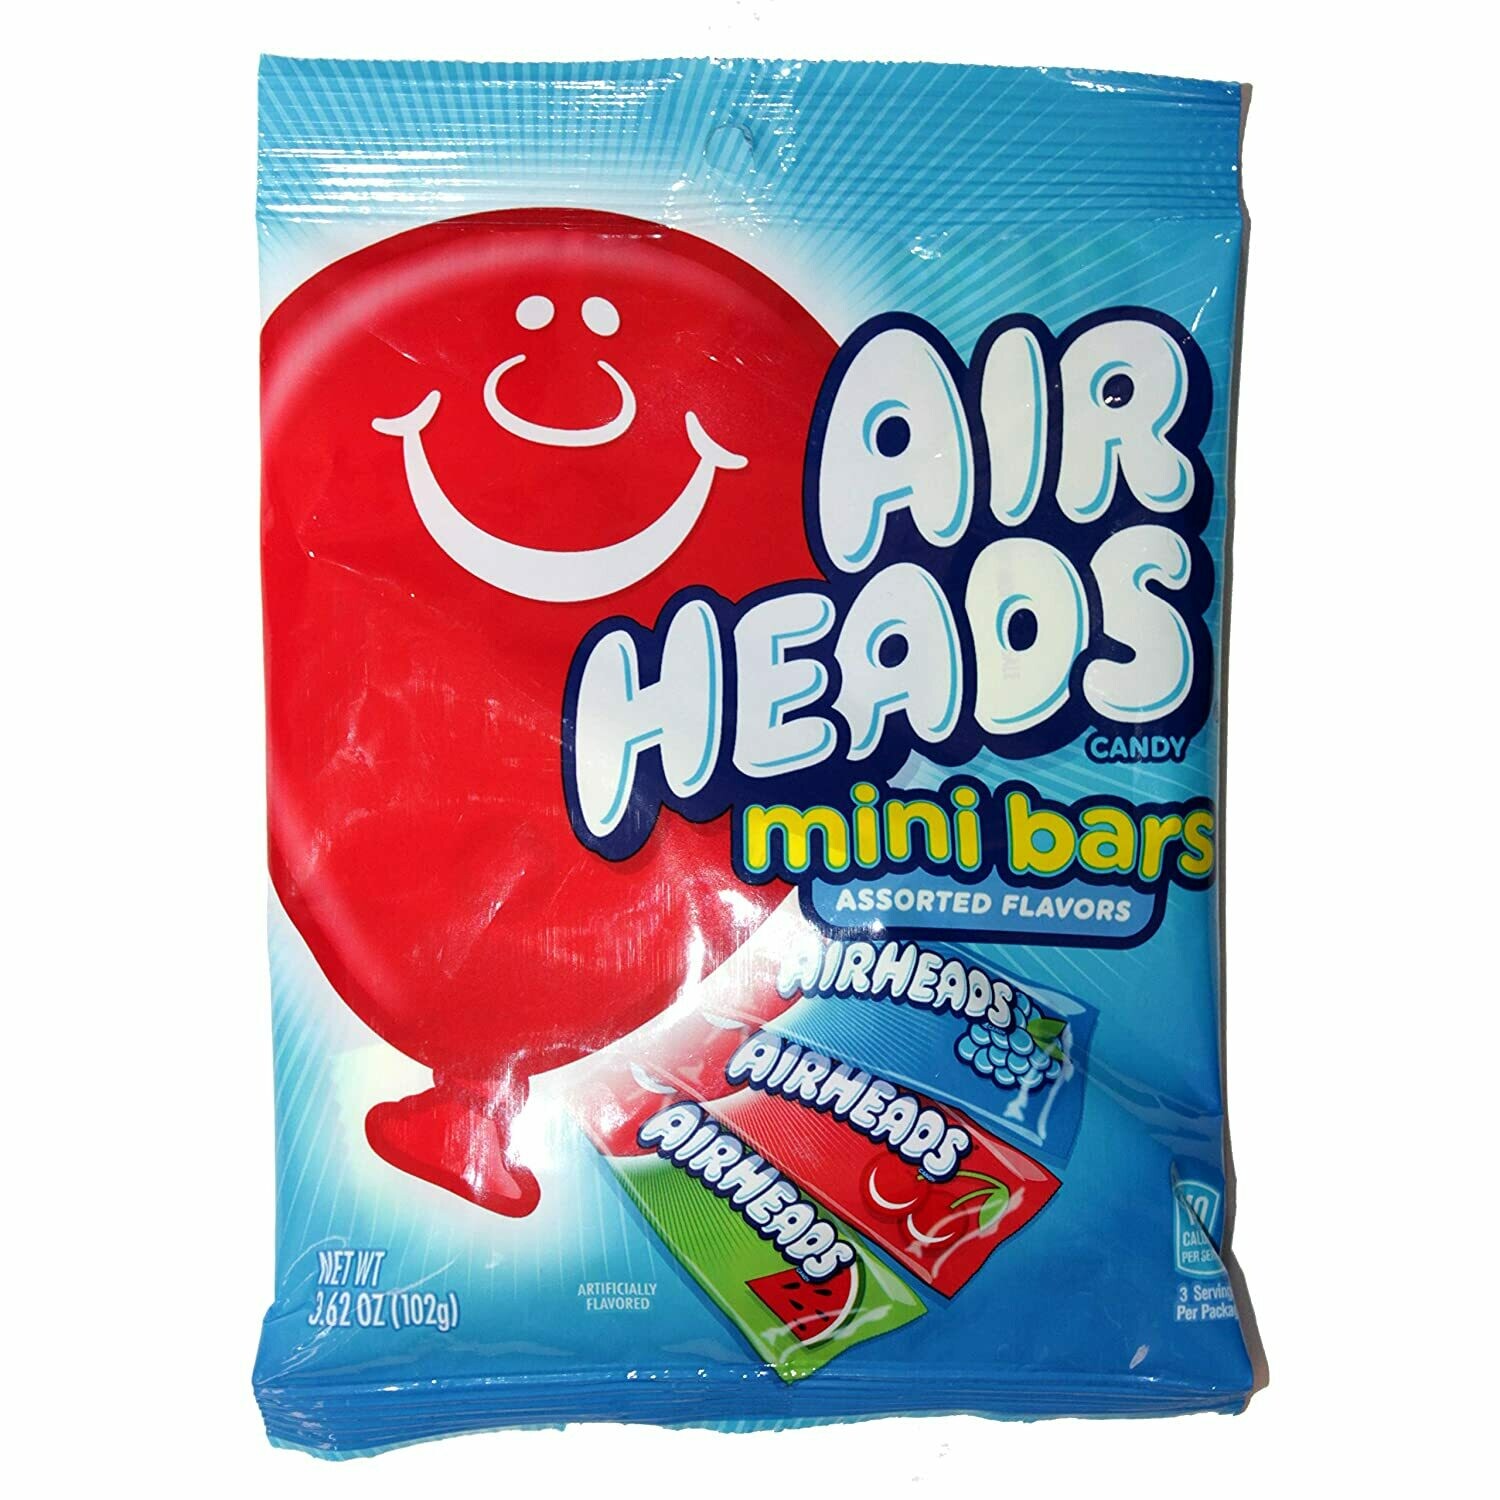 Airheads Mini Bars Assorted Flavors